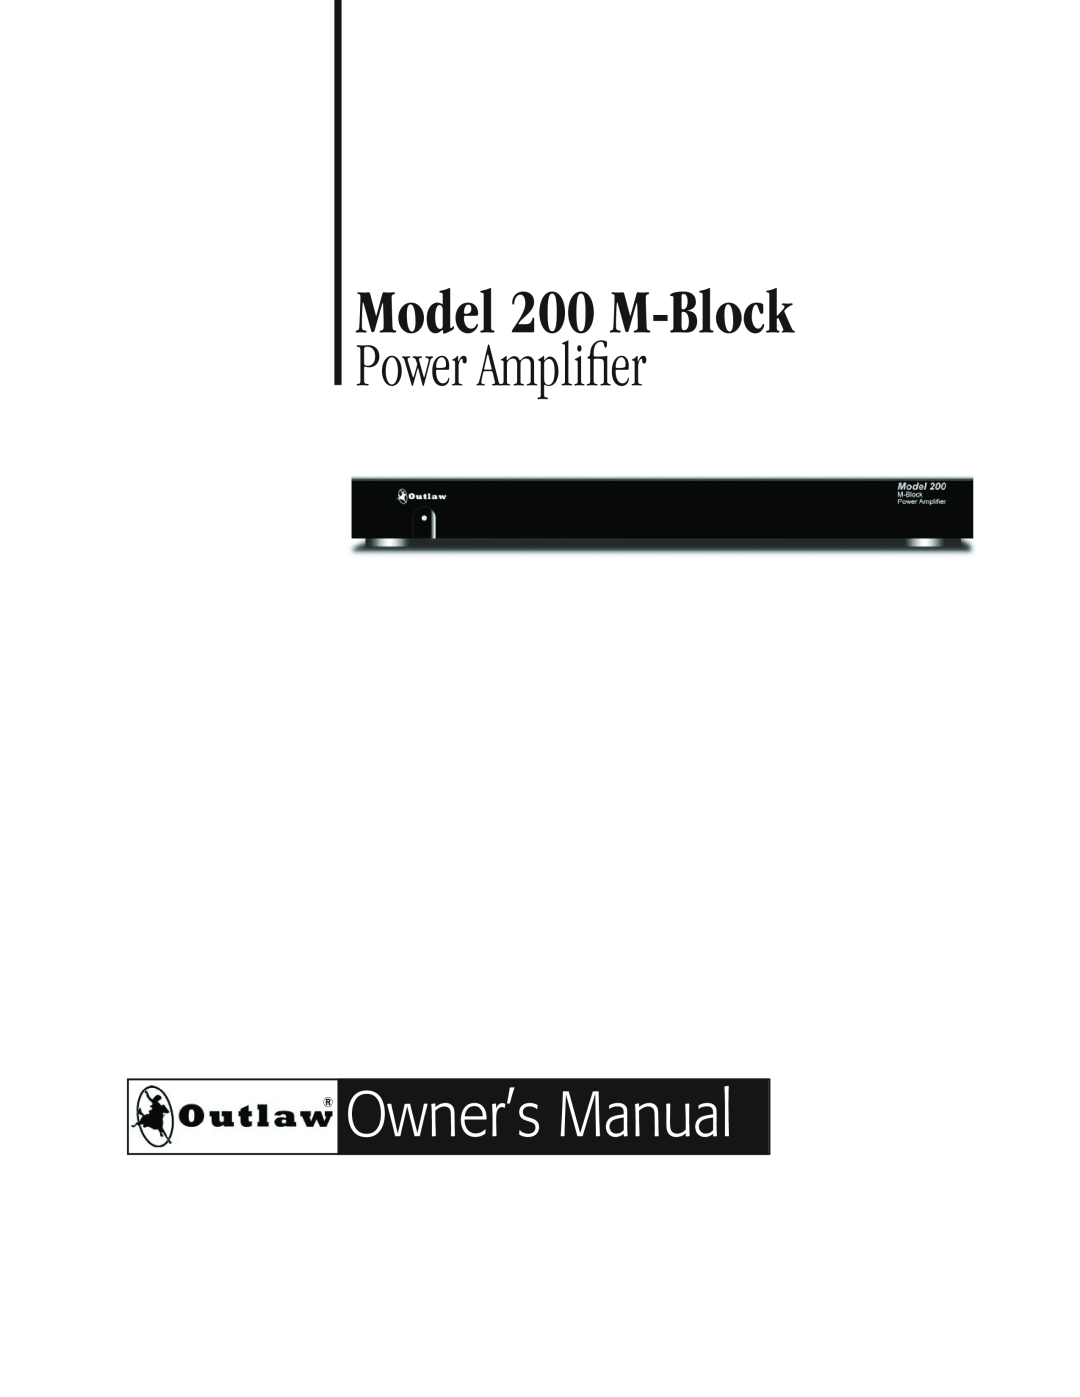 Outlaw Audio owner manual Model 200 M-Block, Power Amplifier 